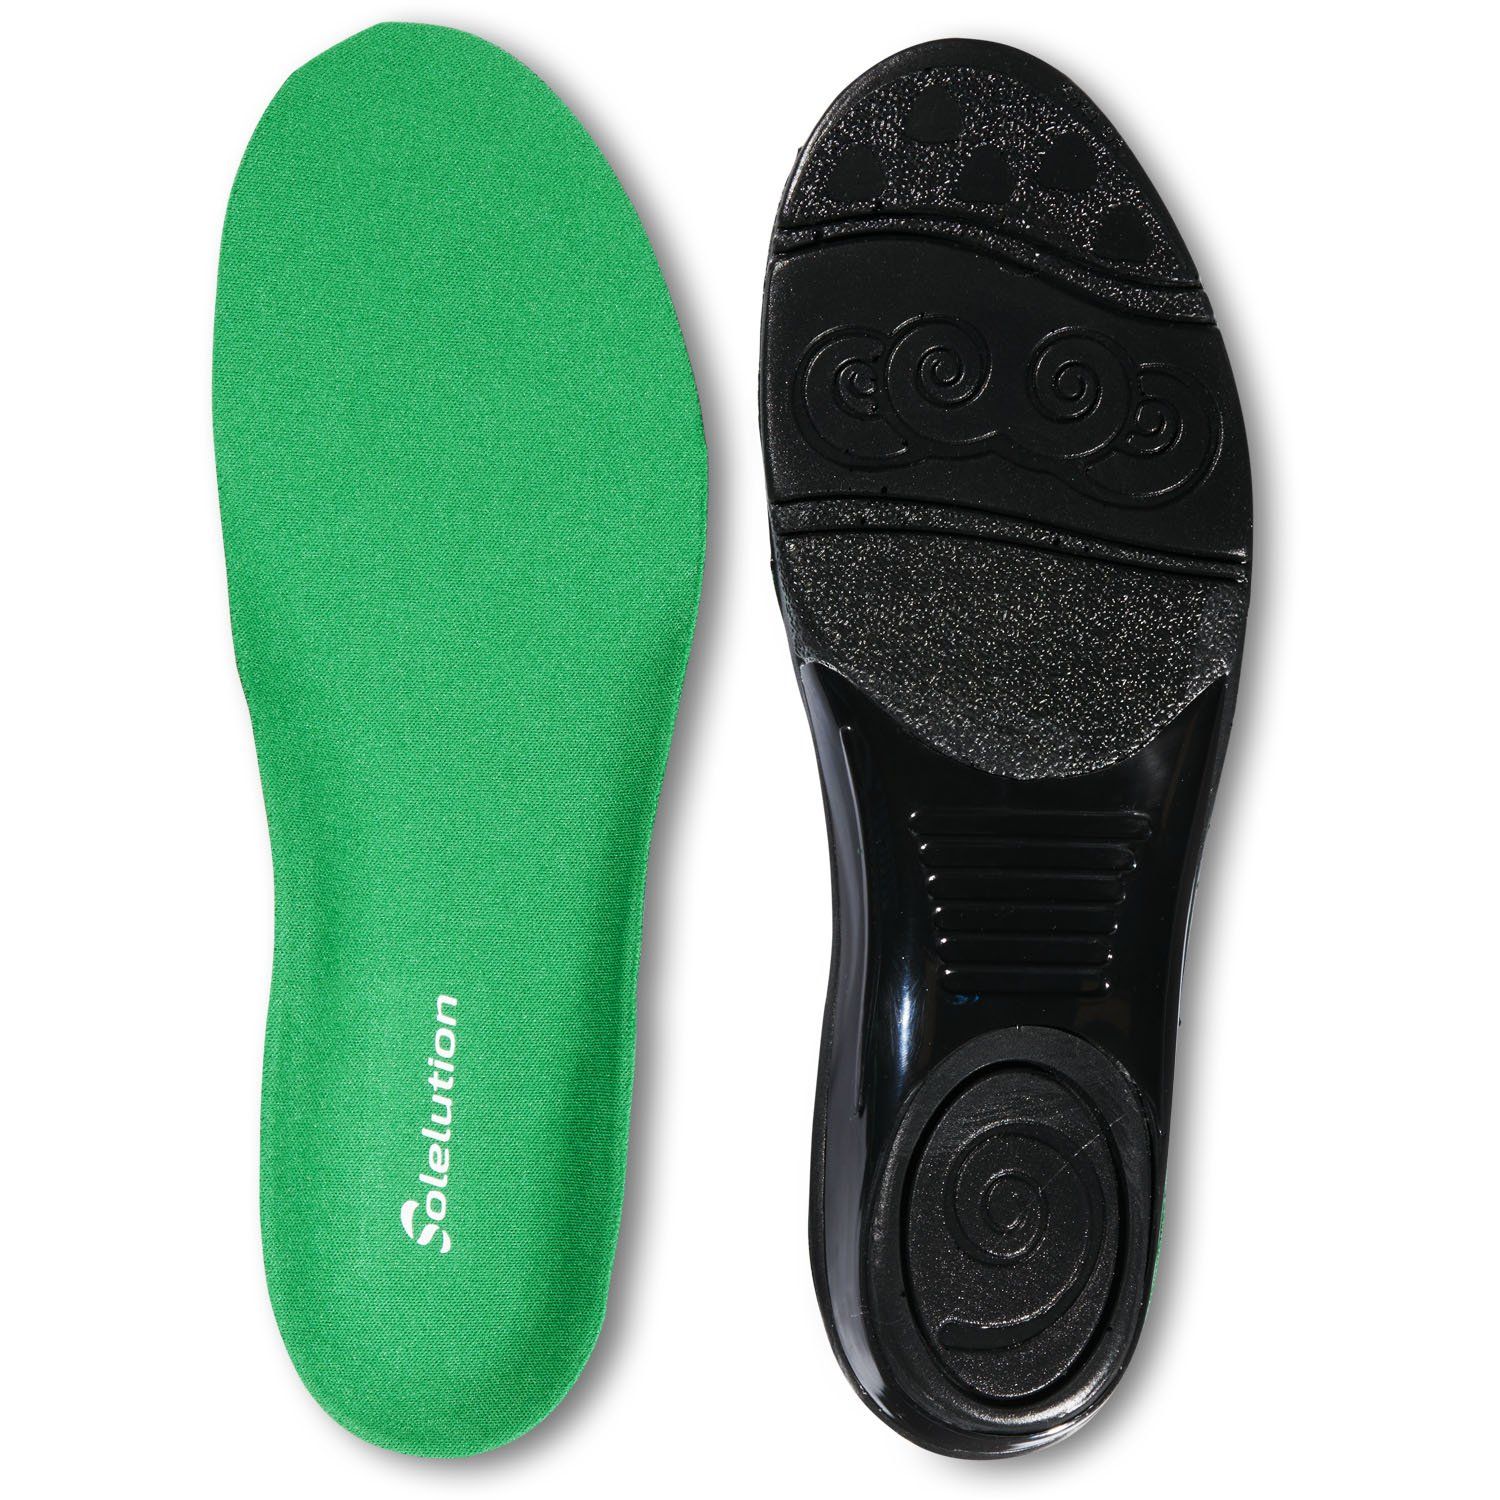 Solelution sports insoles shoe